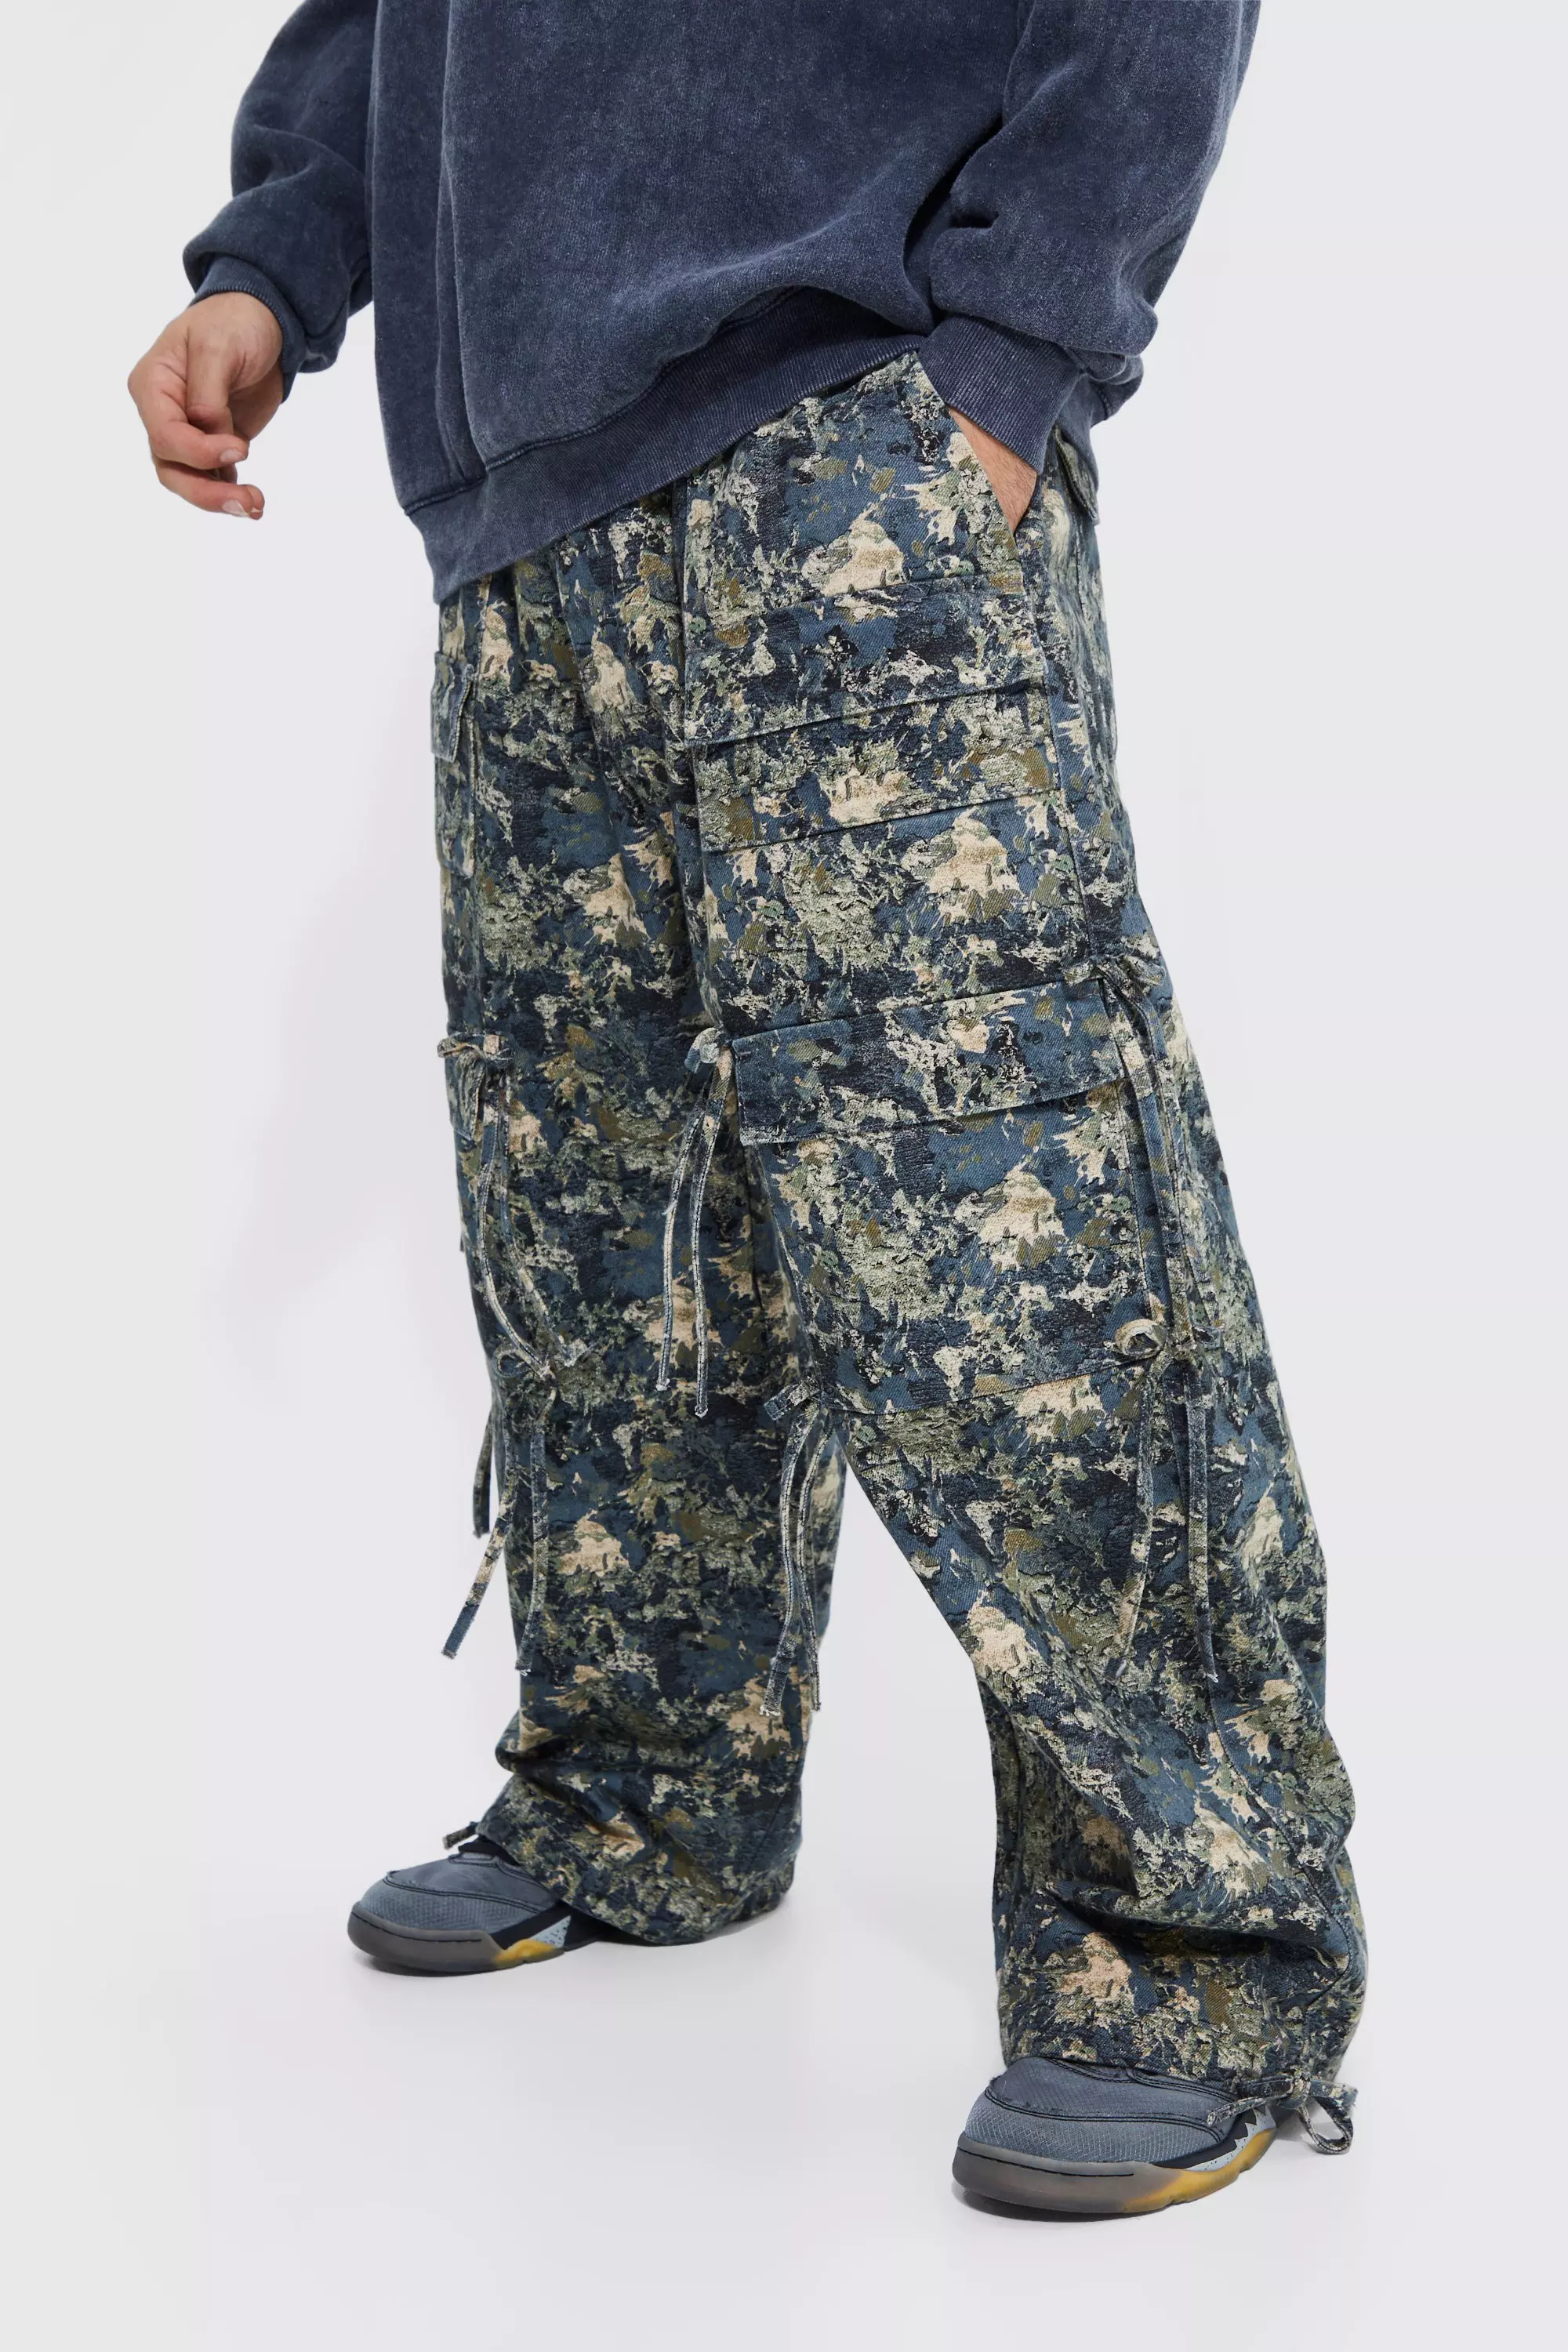 classy camo pants outfit｜TikTok Search